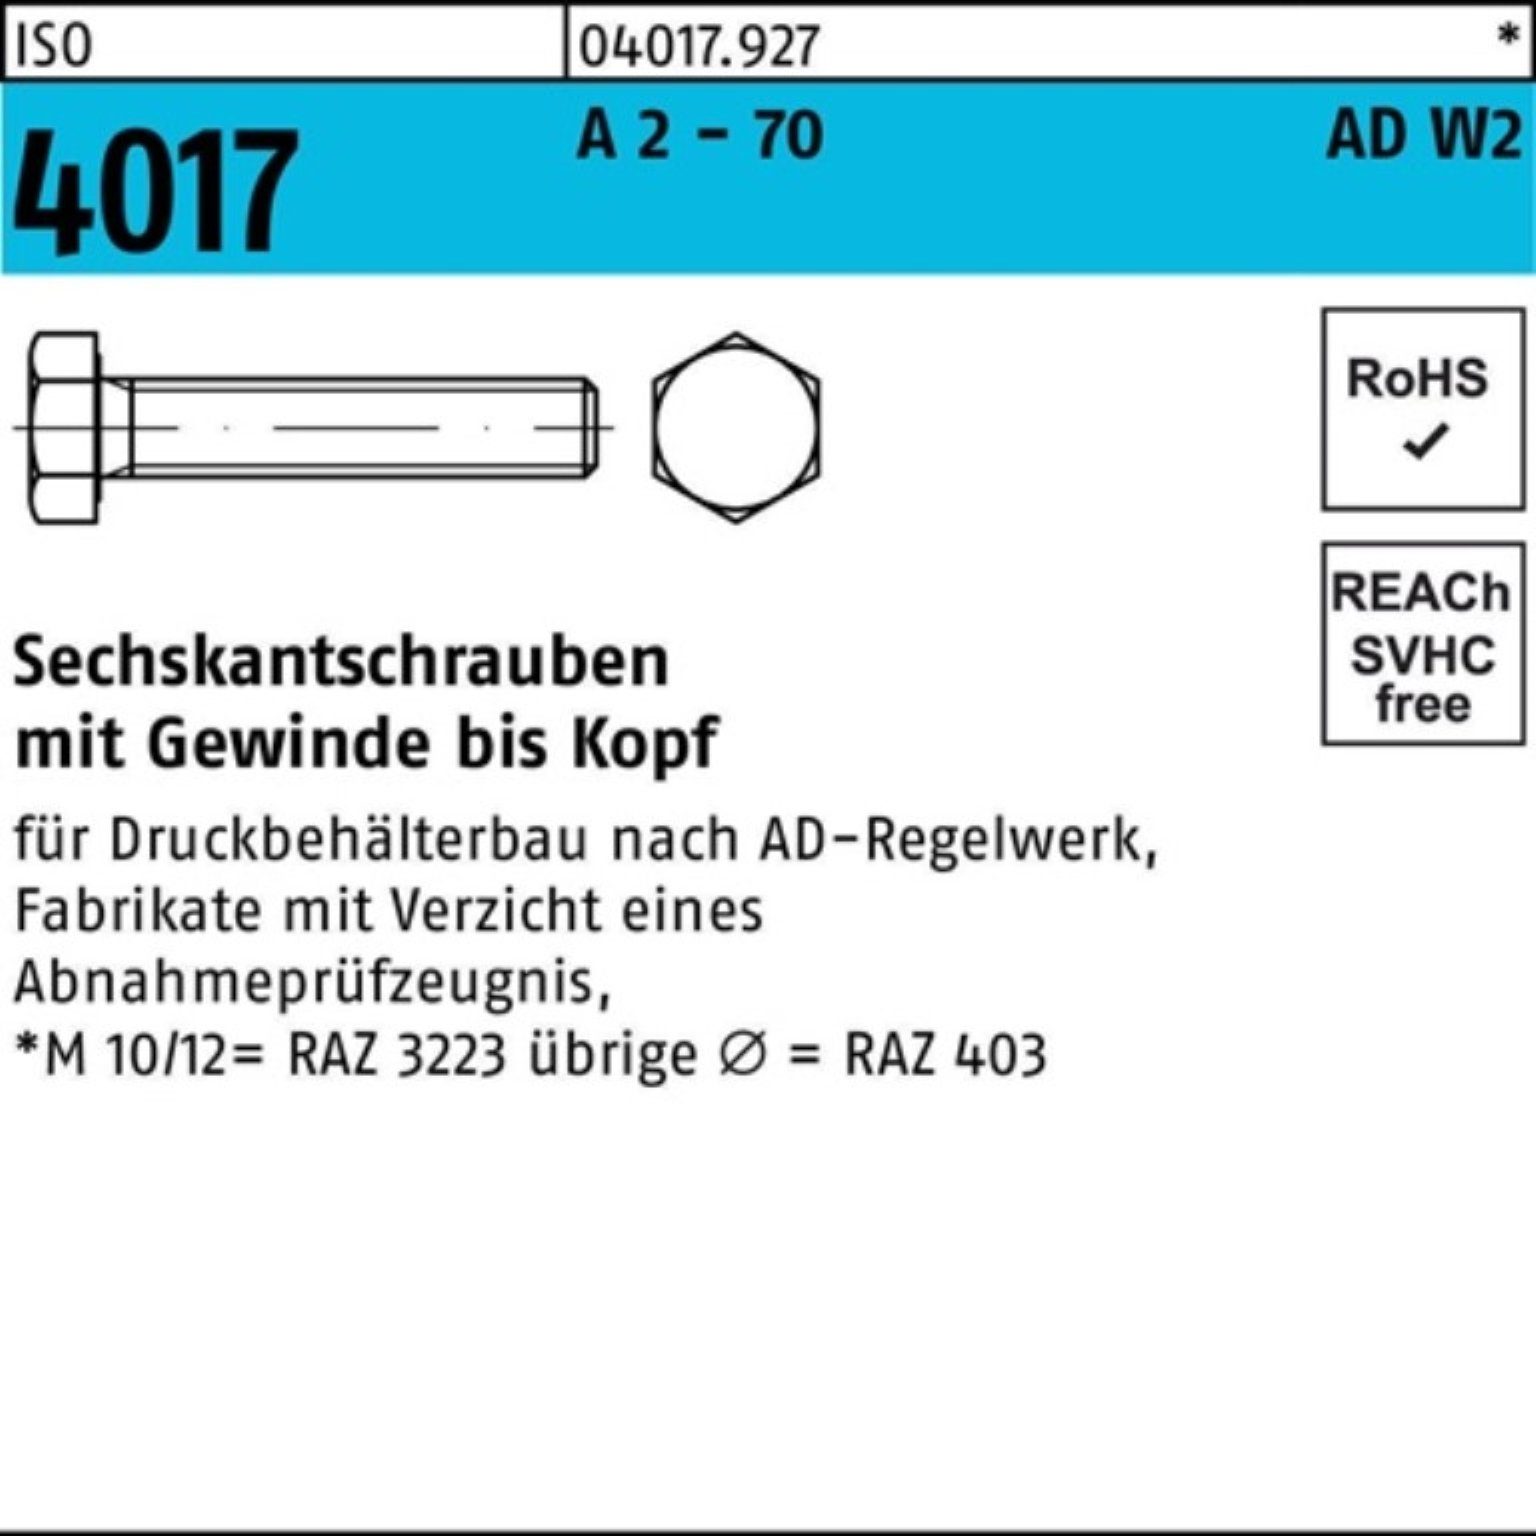 Bufab Sechskantschraube 100er Pack Sechskantschraube ISO 4017 VG M10x 30 A 2 - 70 AD-W2 100 St